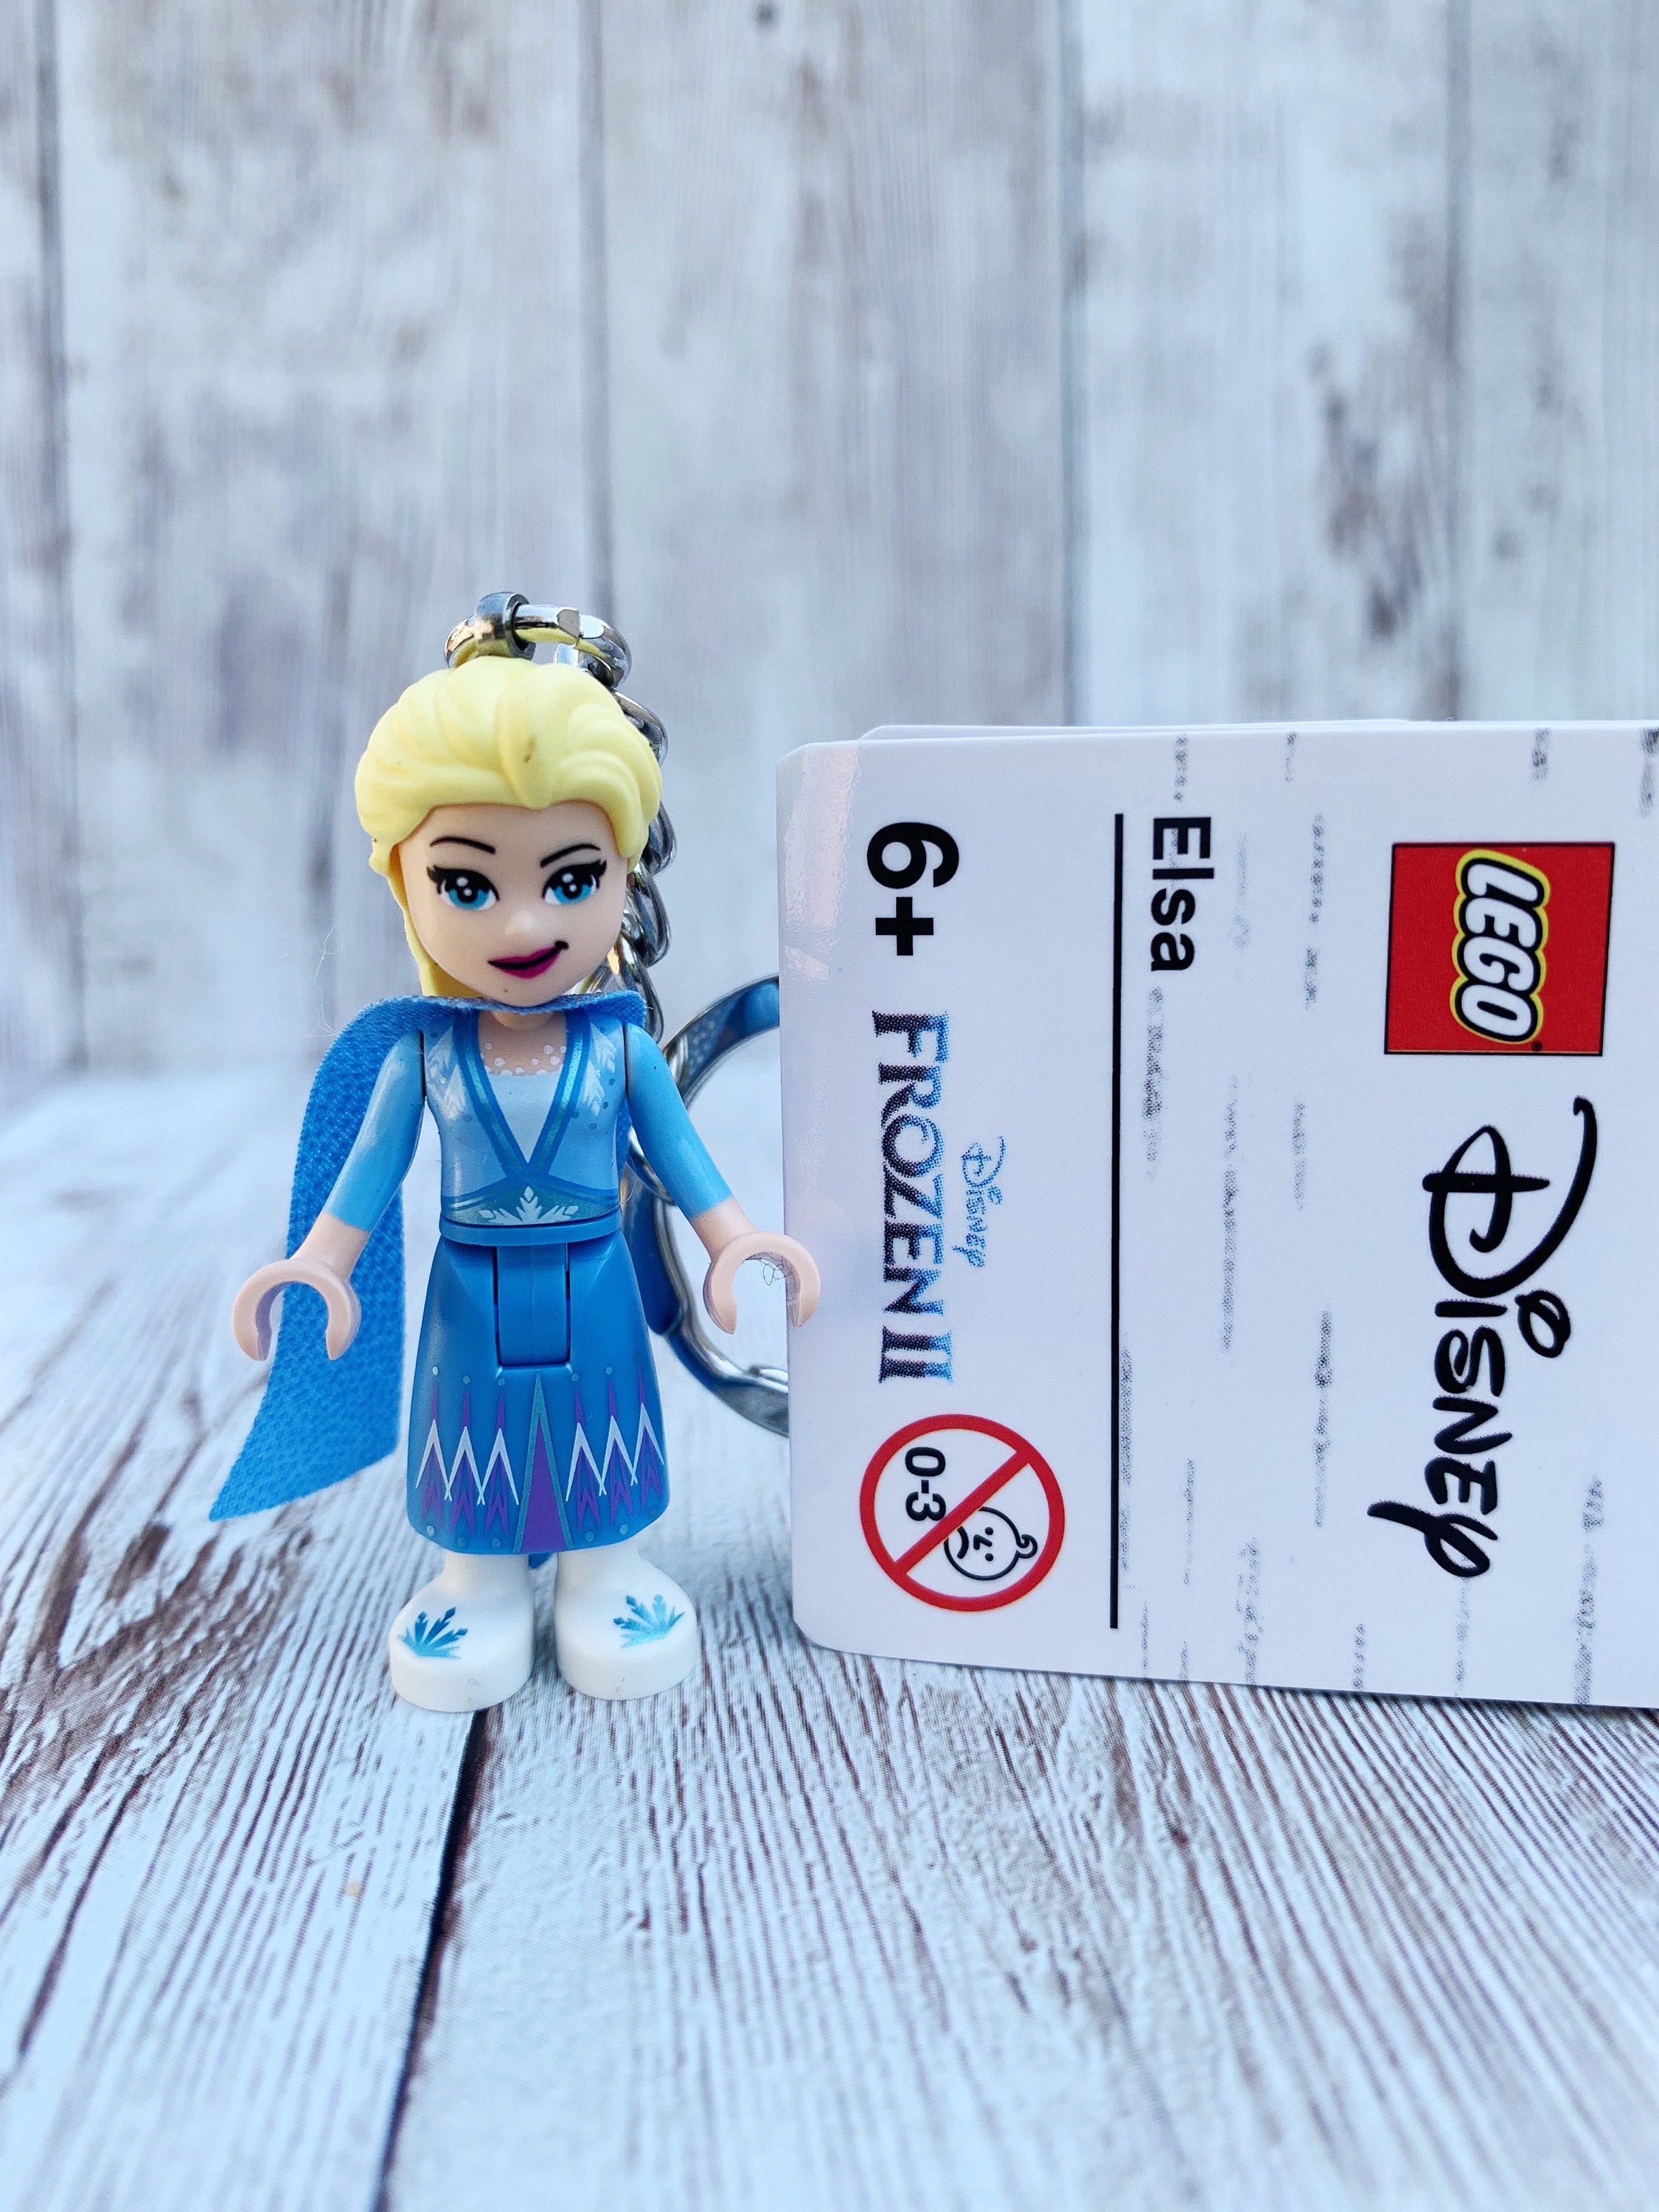 Portachiavi Elsa Disney Frozen – MINISO ITALIA S.r.l.